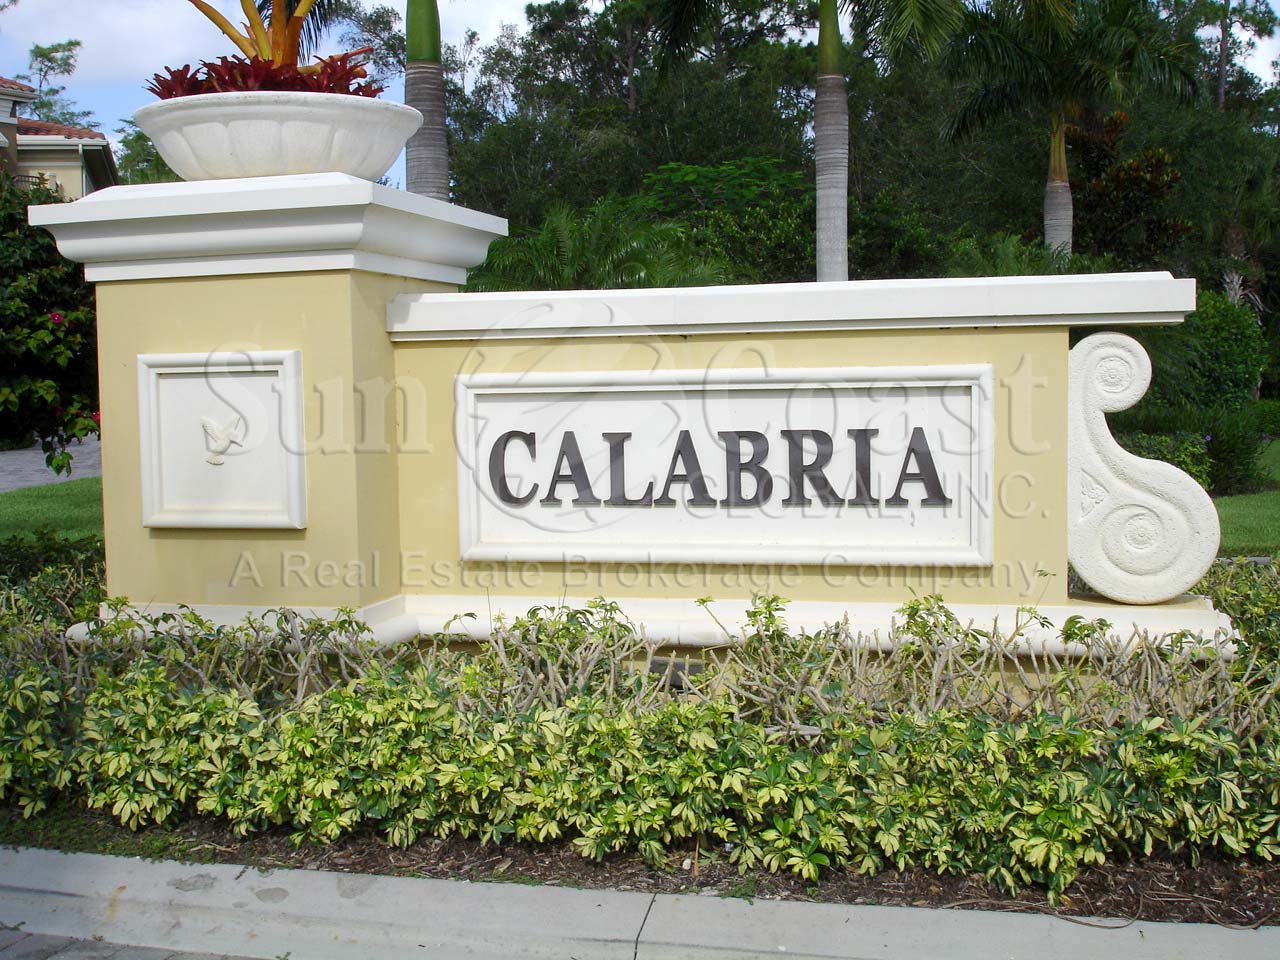 Calabria sign